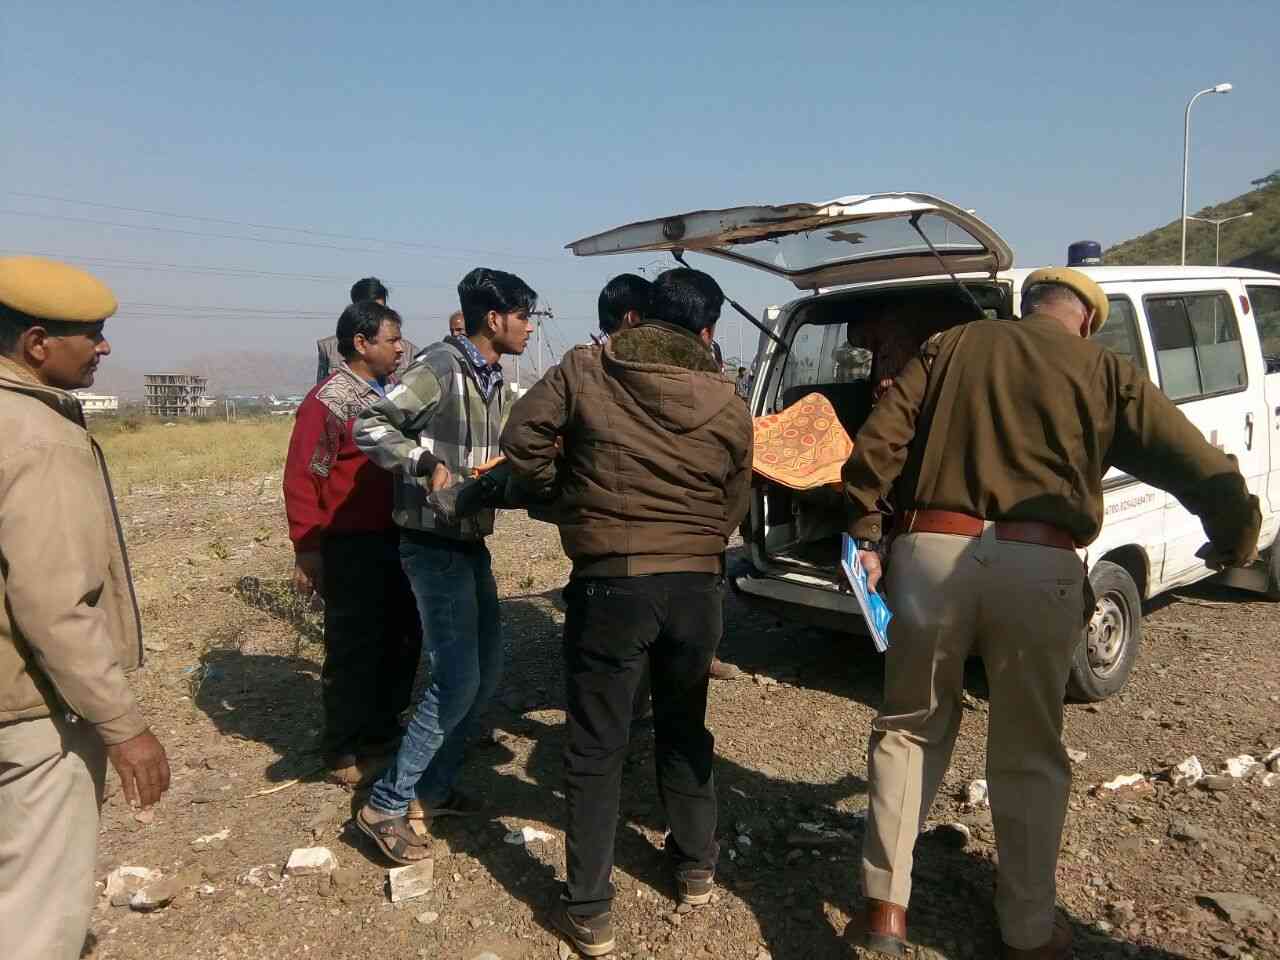 dead body found in sukher udaipur